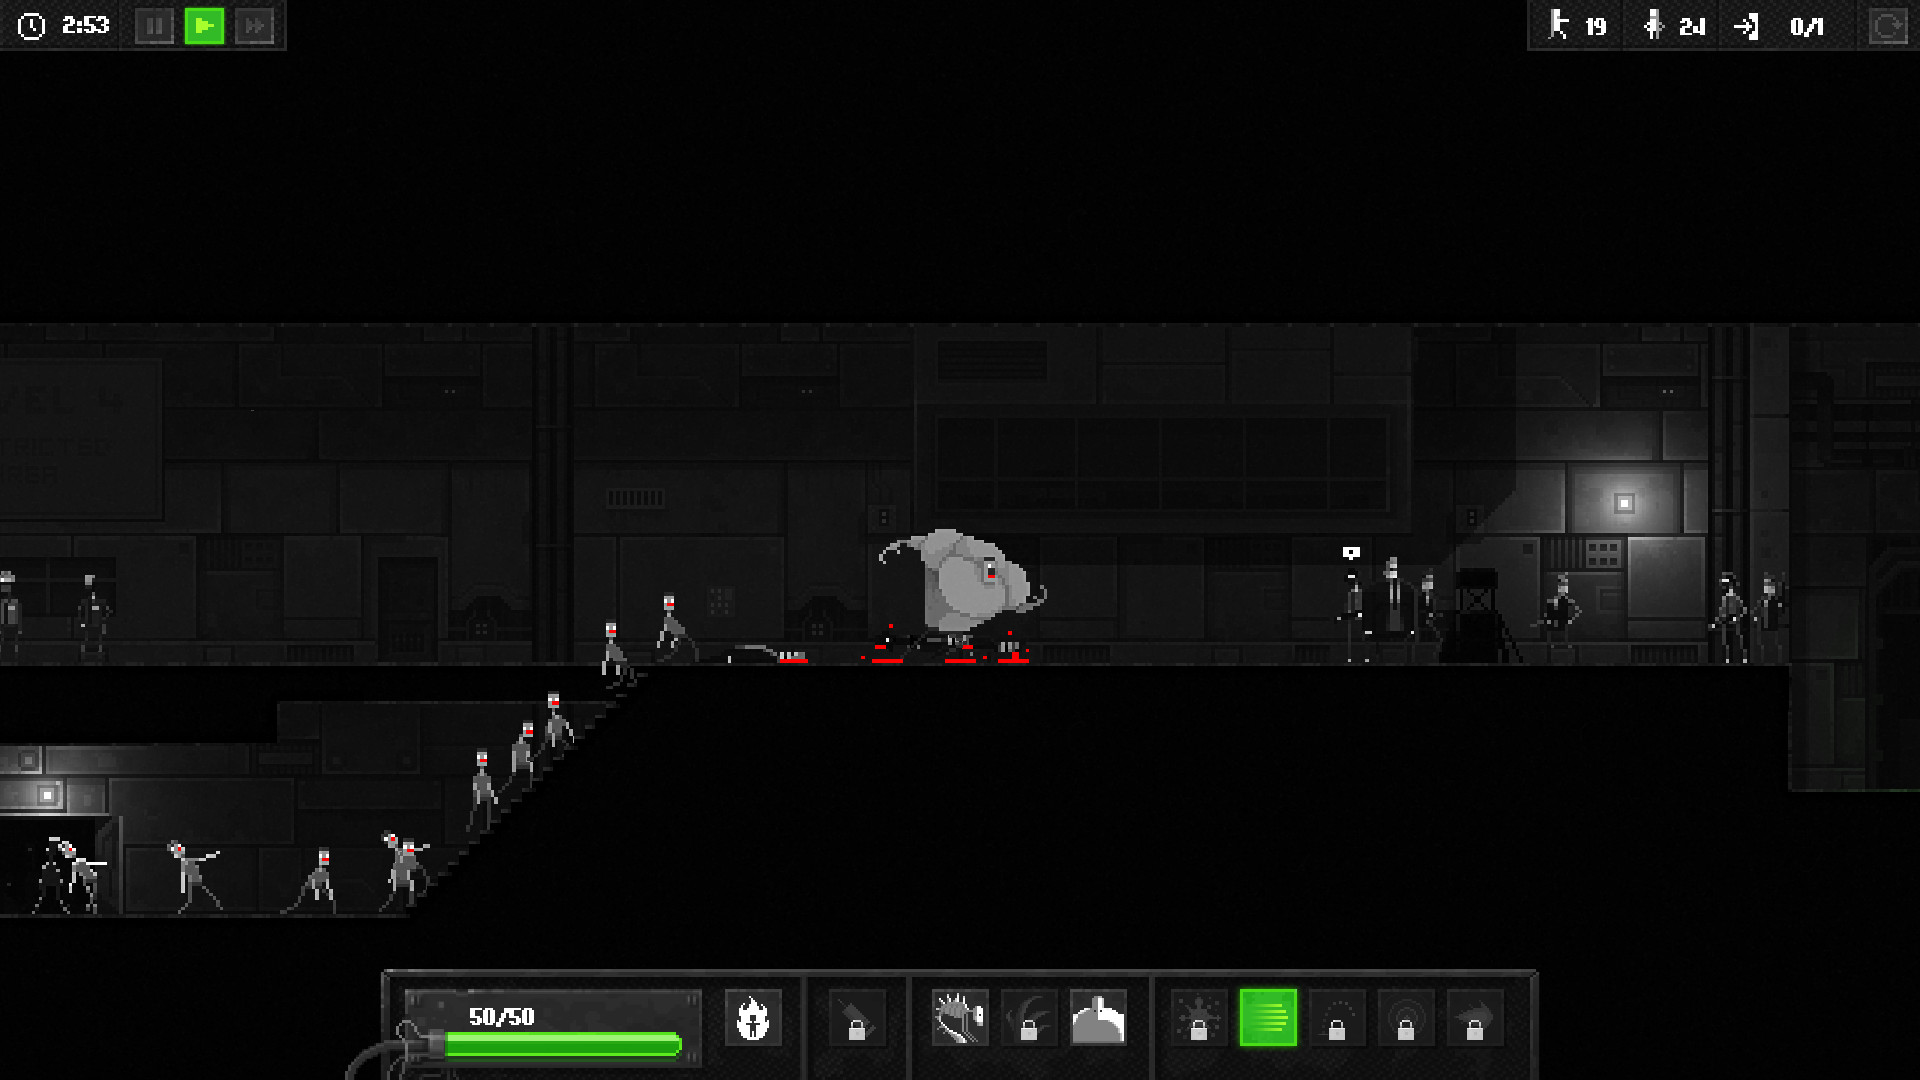 Zombie Night Terror on Steam